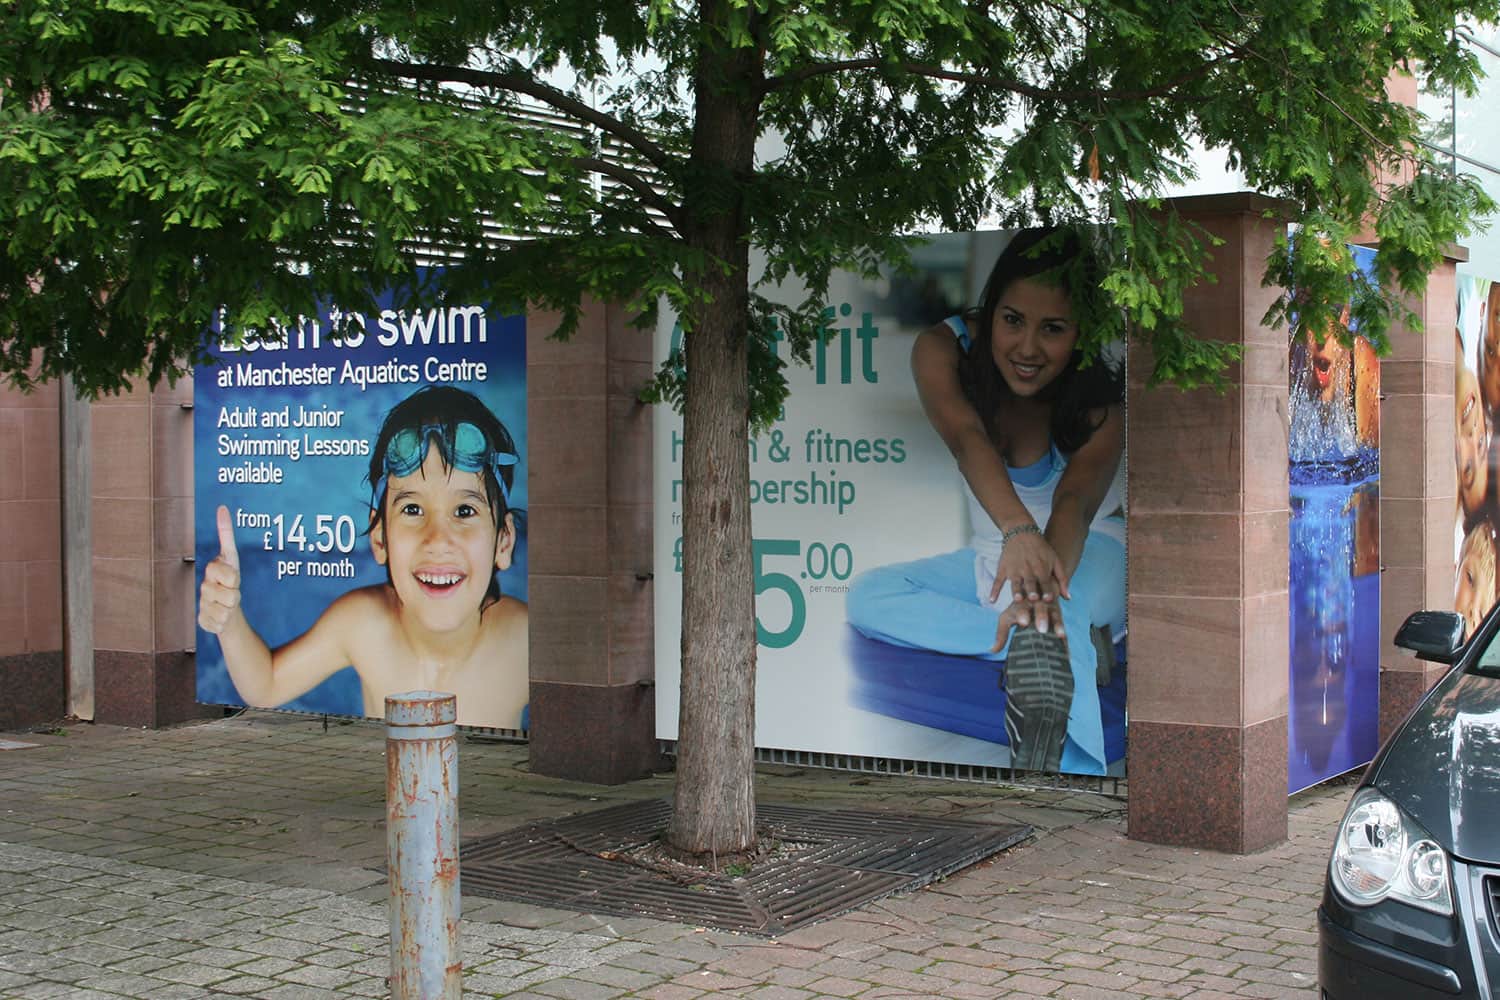 Manchester Aquatics Centre hoarding boards